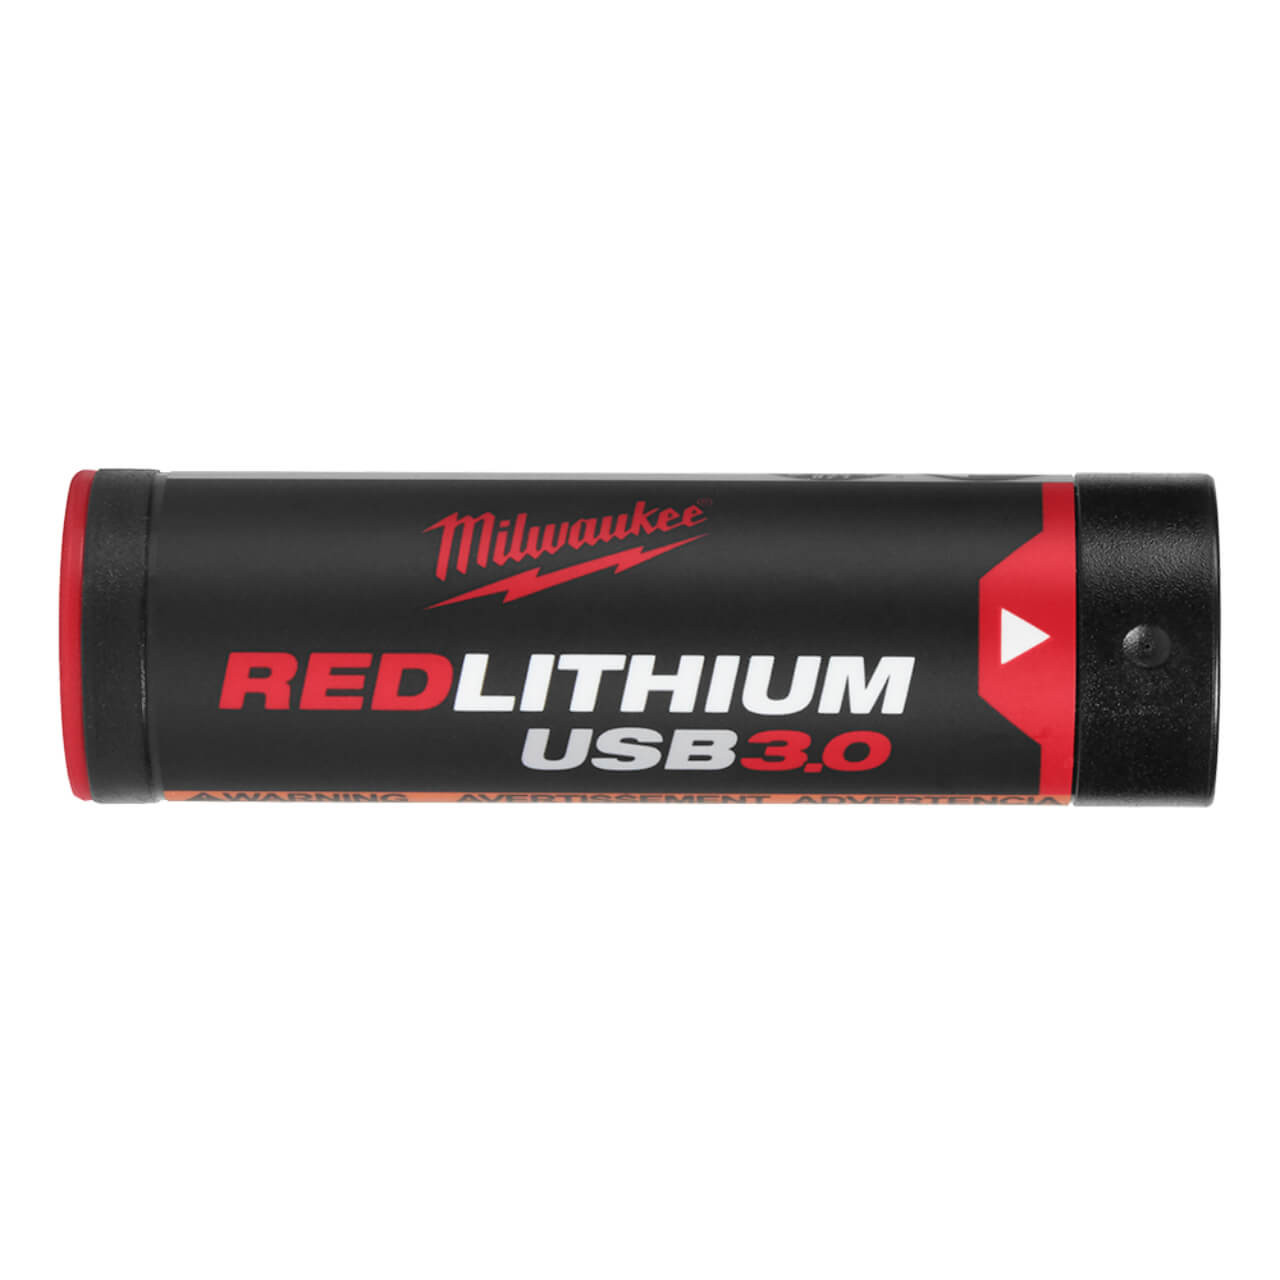 Milwaukee Redlithium USB 3.0Ah Battery